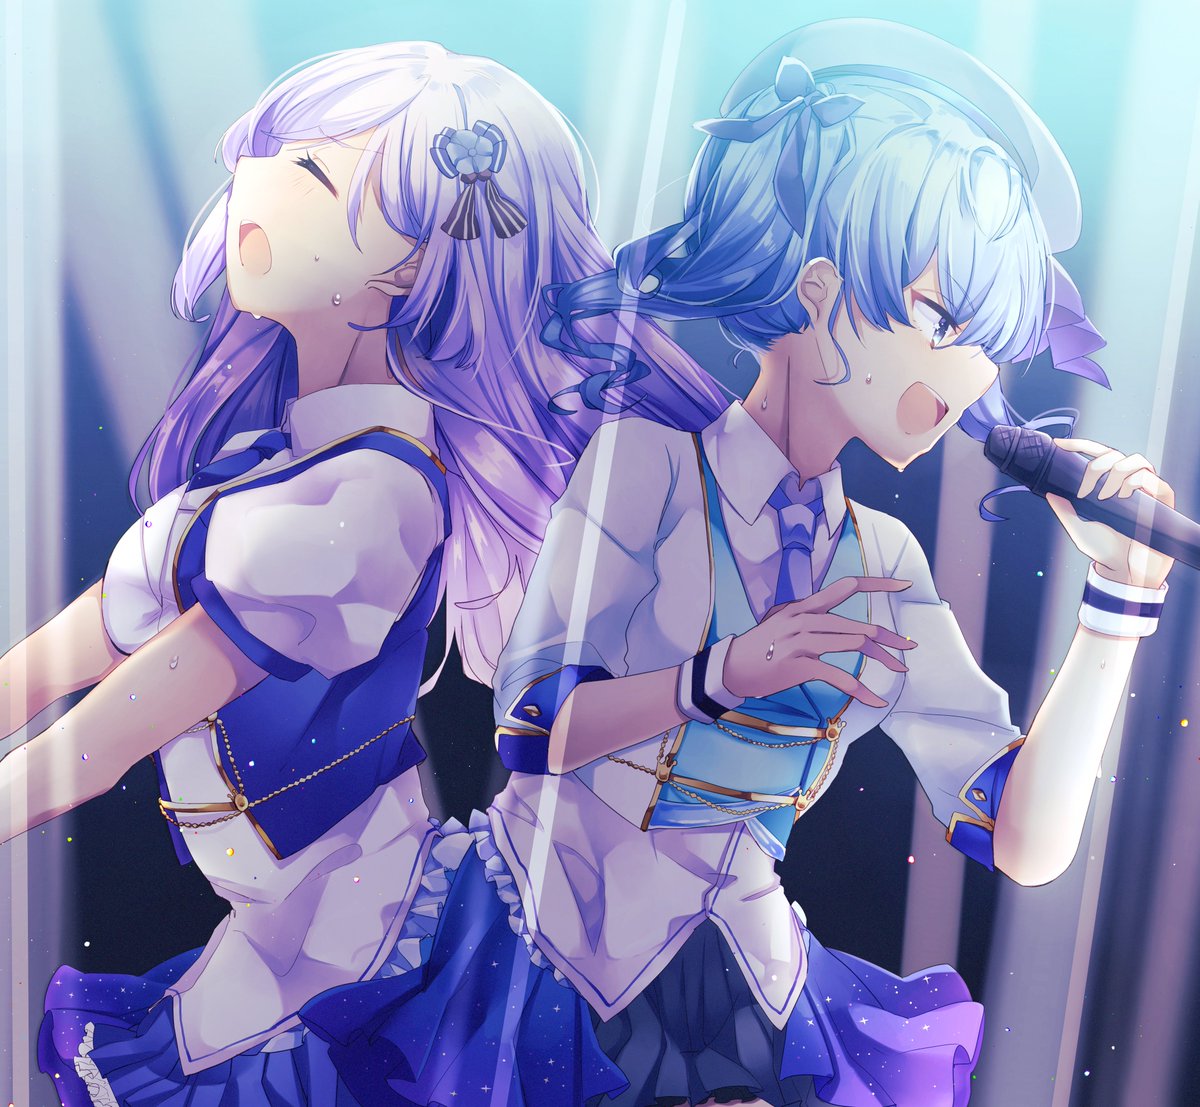 hoshimachi suisei multiple girls 2girls singing music microphone blue hair open mouth  illustration images